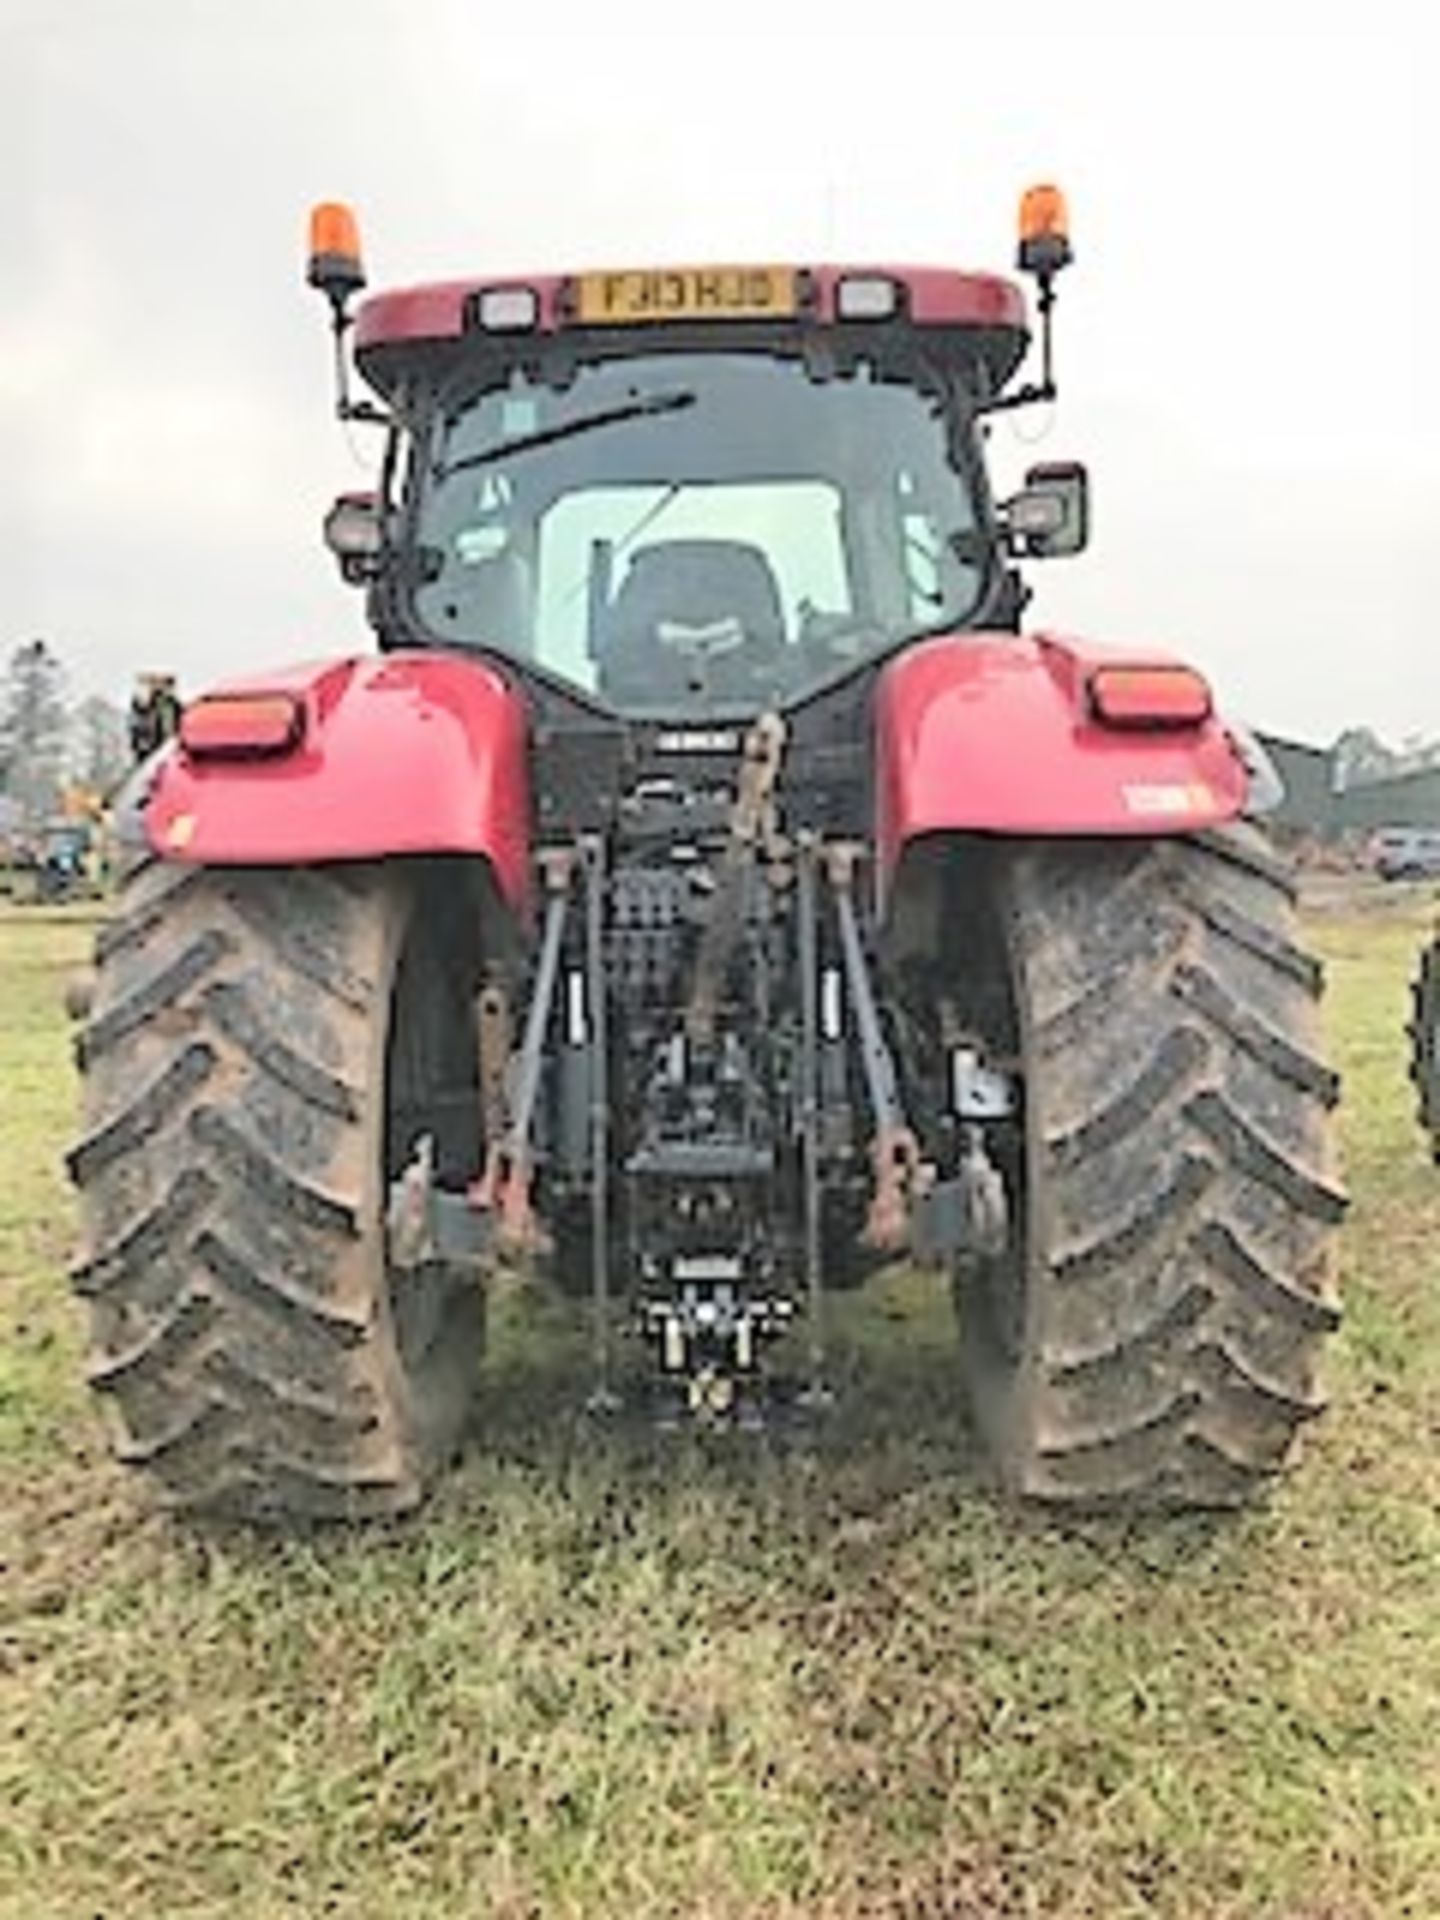 2013 CASE 230 PUMA 4ws tractor. Reg - FJ13HJD. 2742hrs (not verified) - Bild 5 aus 8